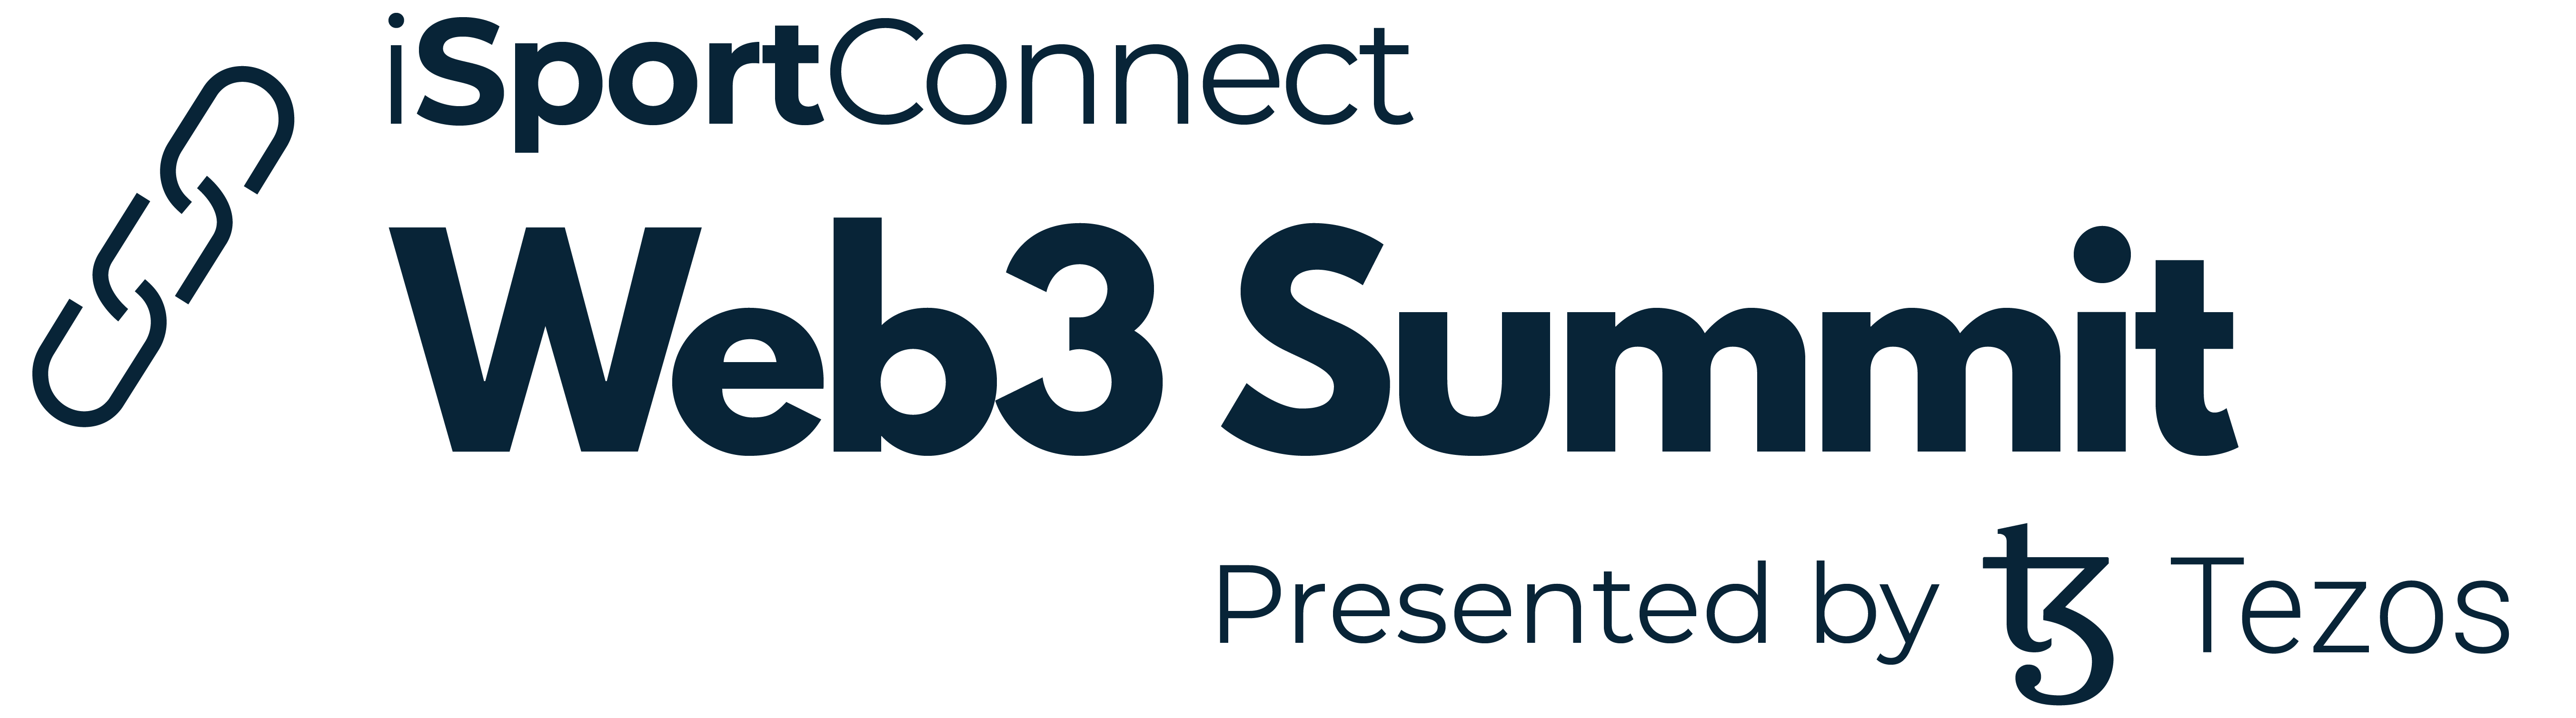 iSportConnect Web3 Summit 2022